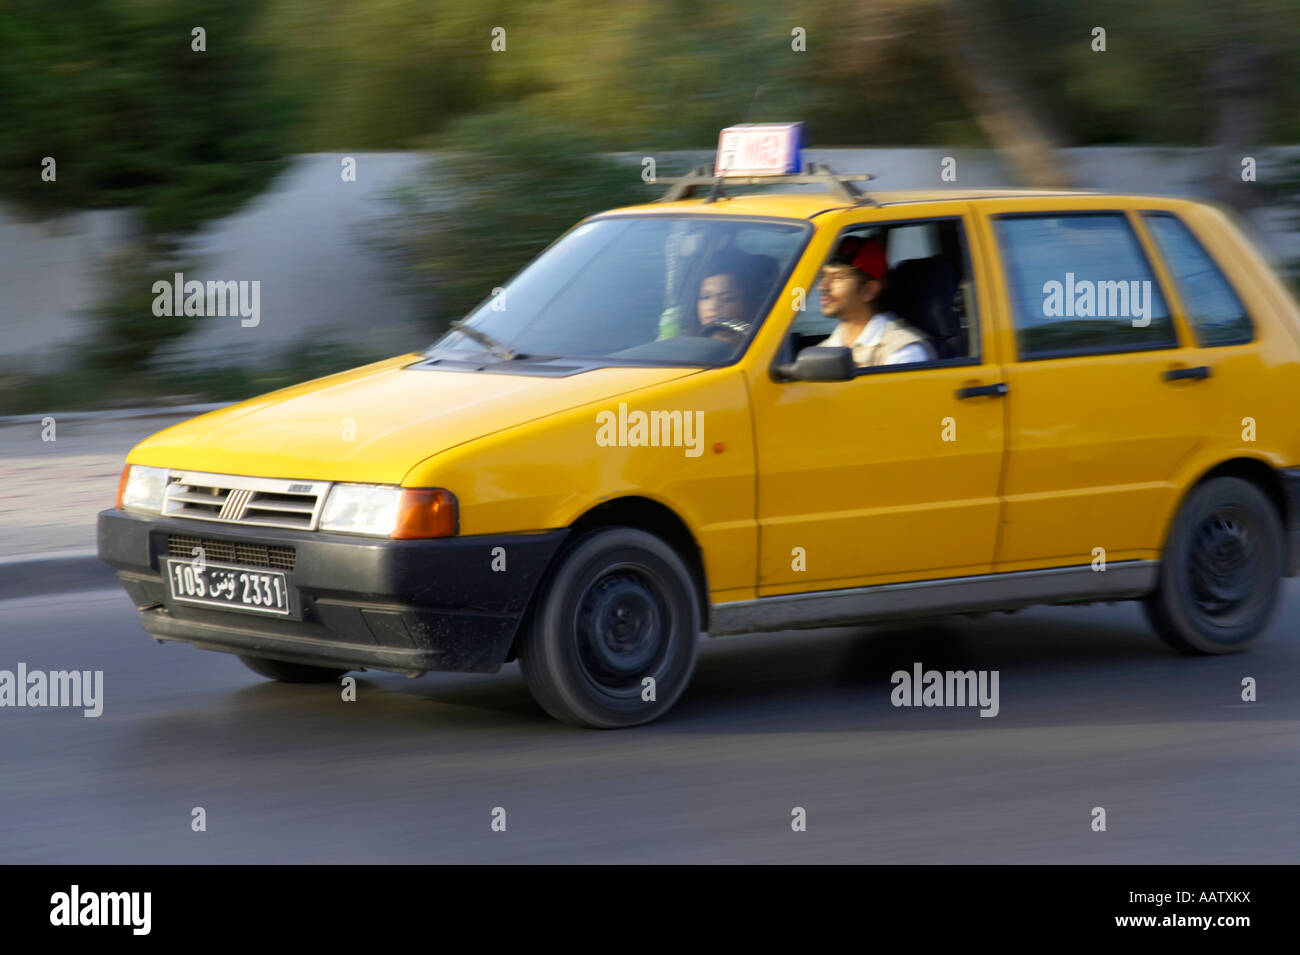 Fiat Taxi Immagini E Fotos Stock Alamy